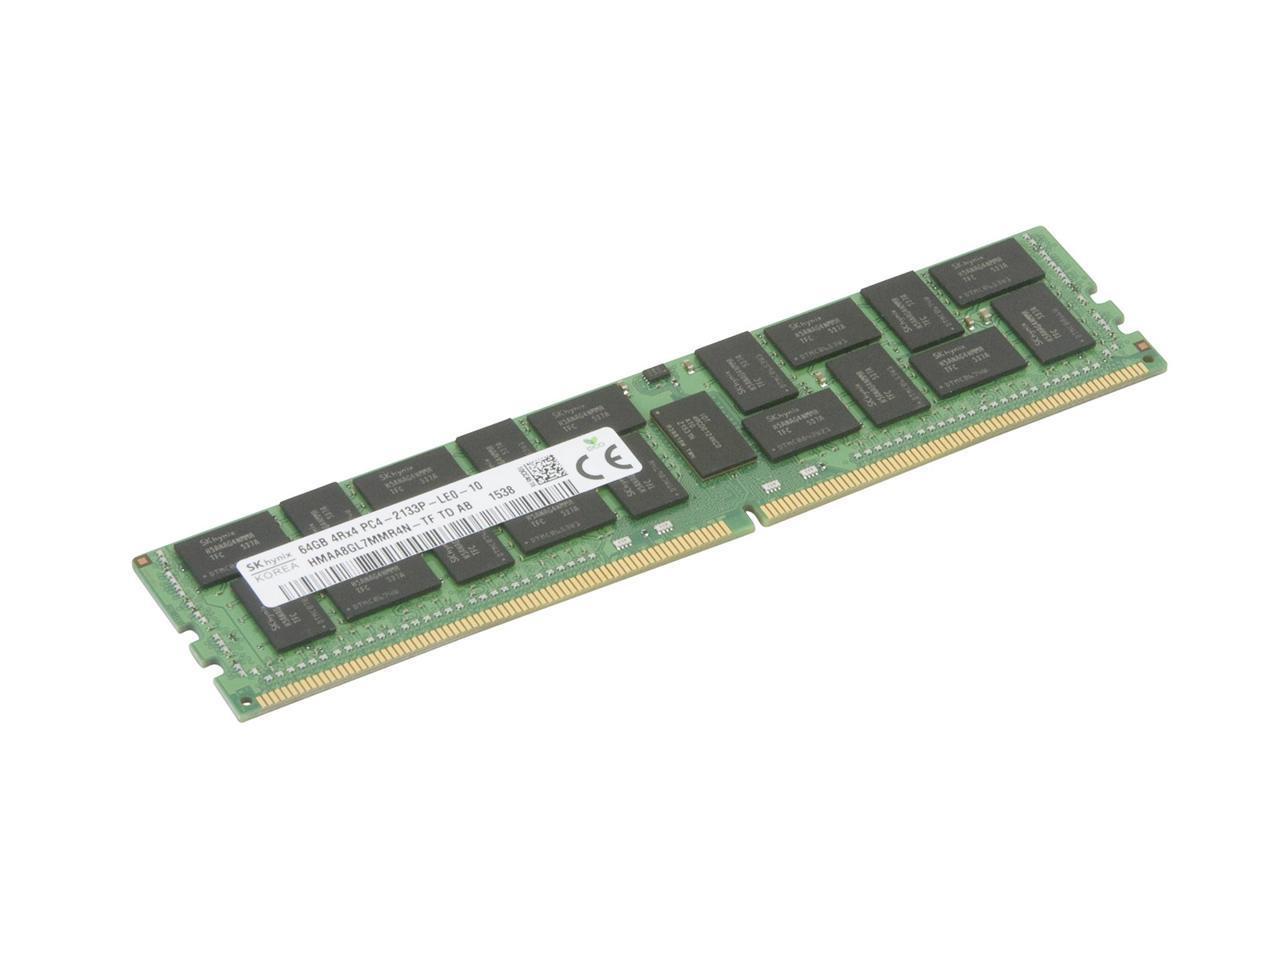 Hynix RAM 128GB 2x64GB DDR4-2133 PC4-17000 4Rx4 ECC